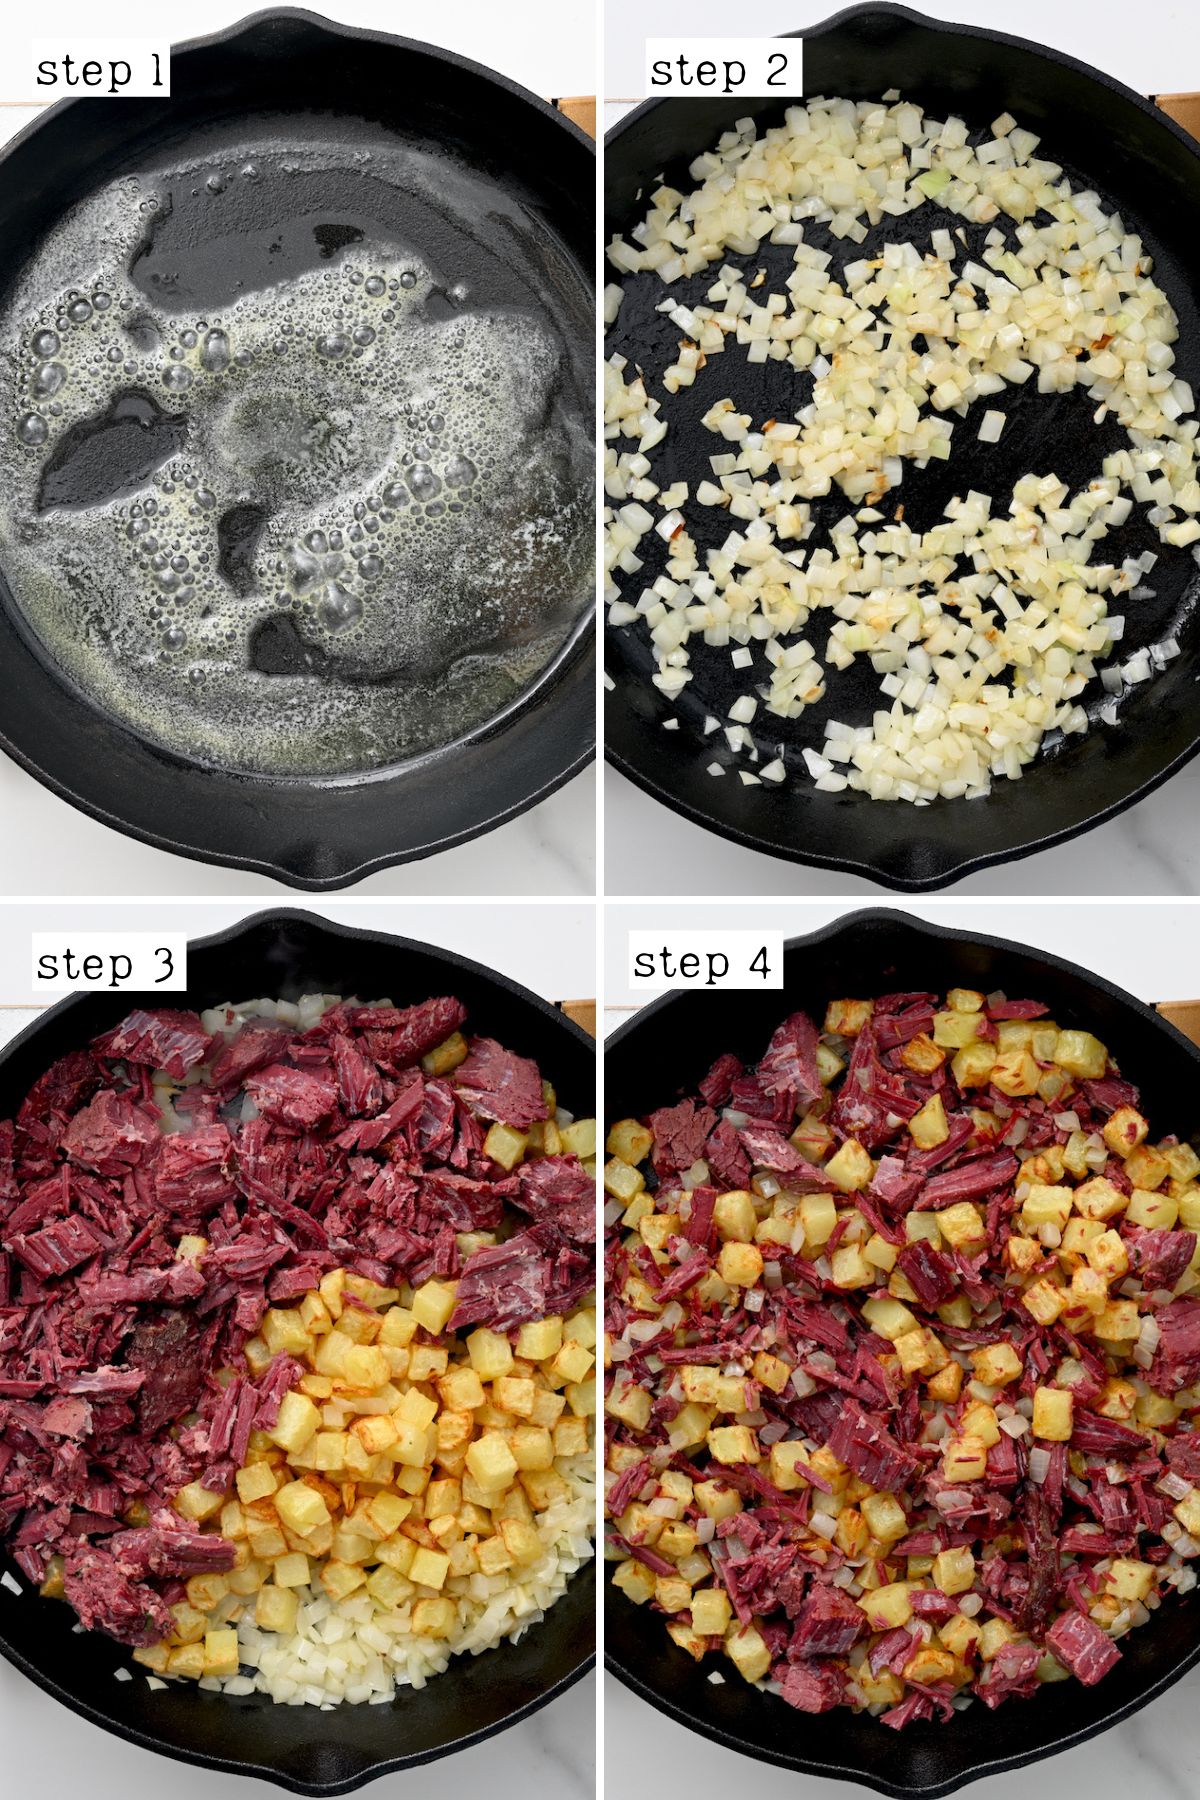 Steps for preparing corned beef hash